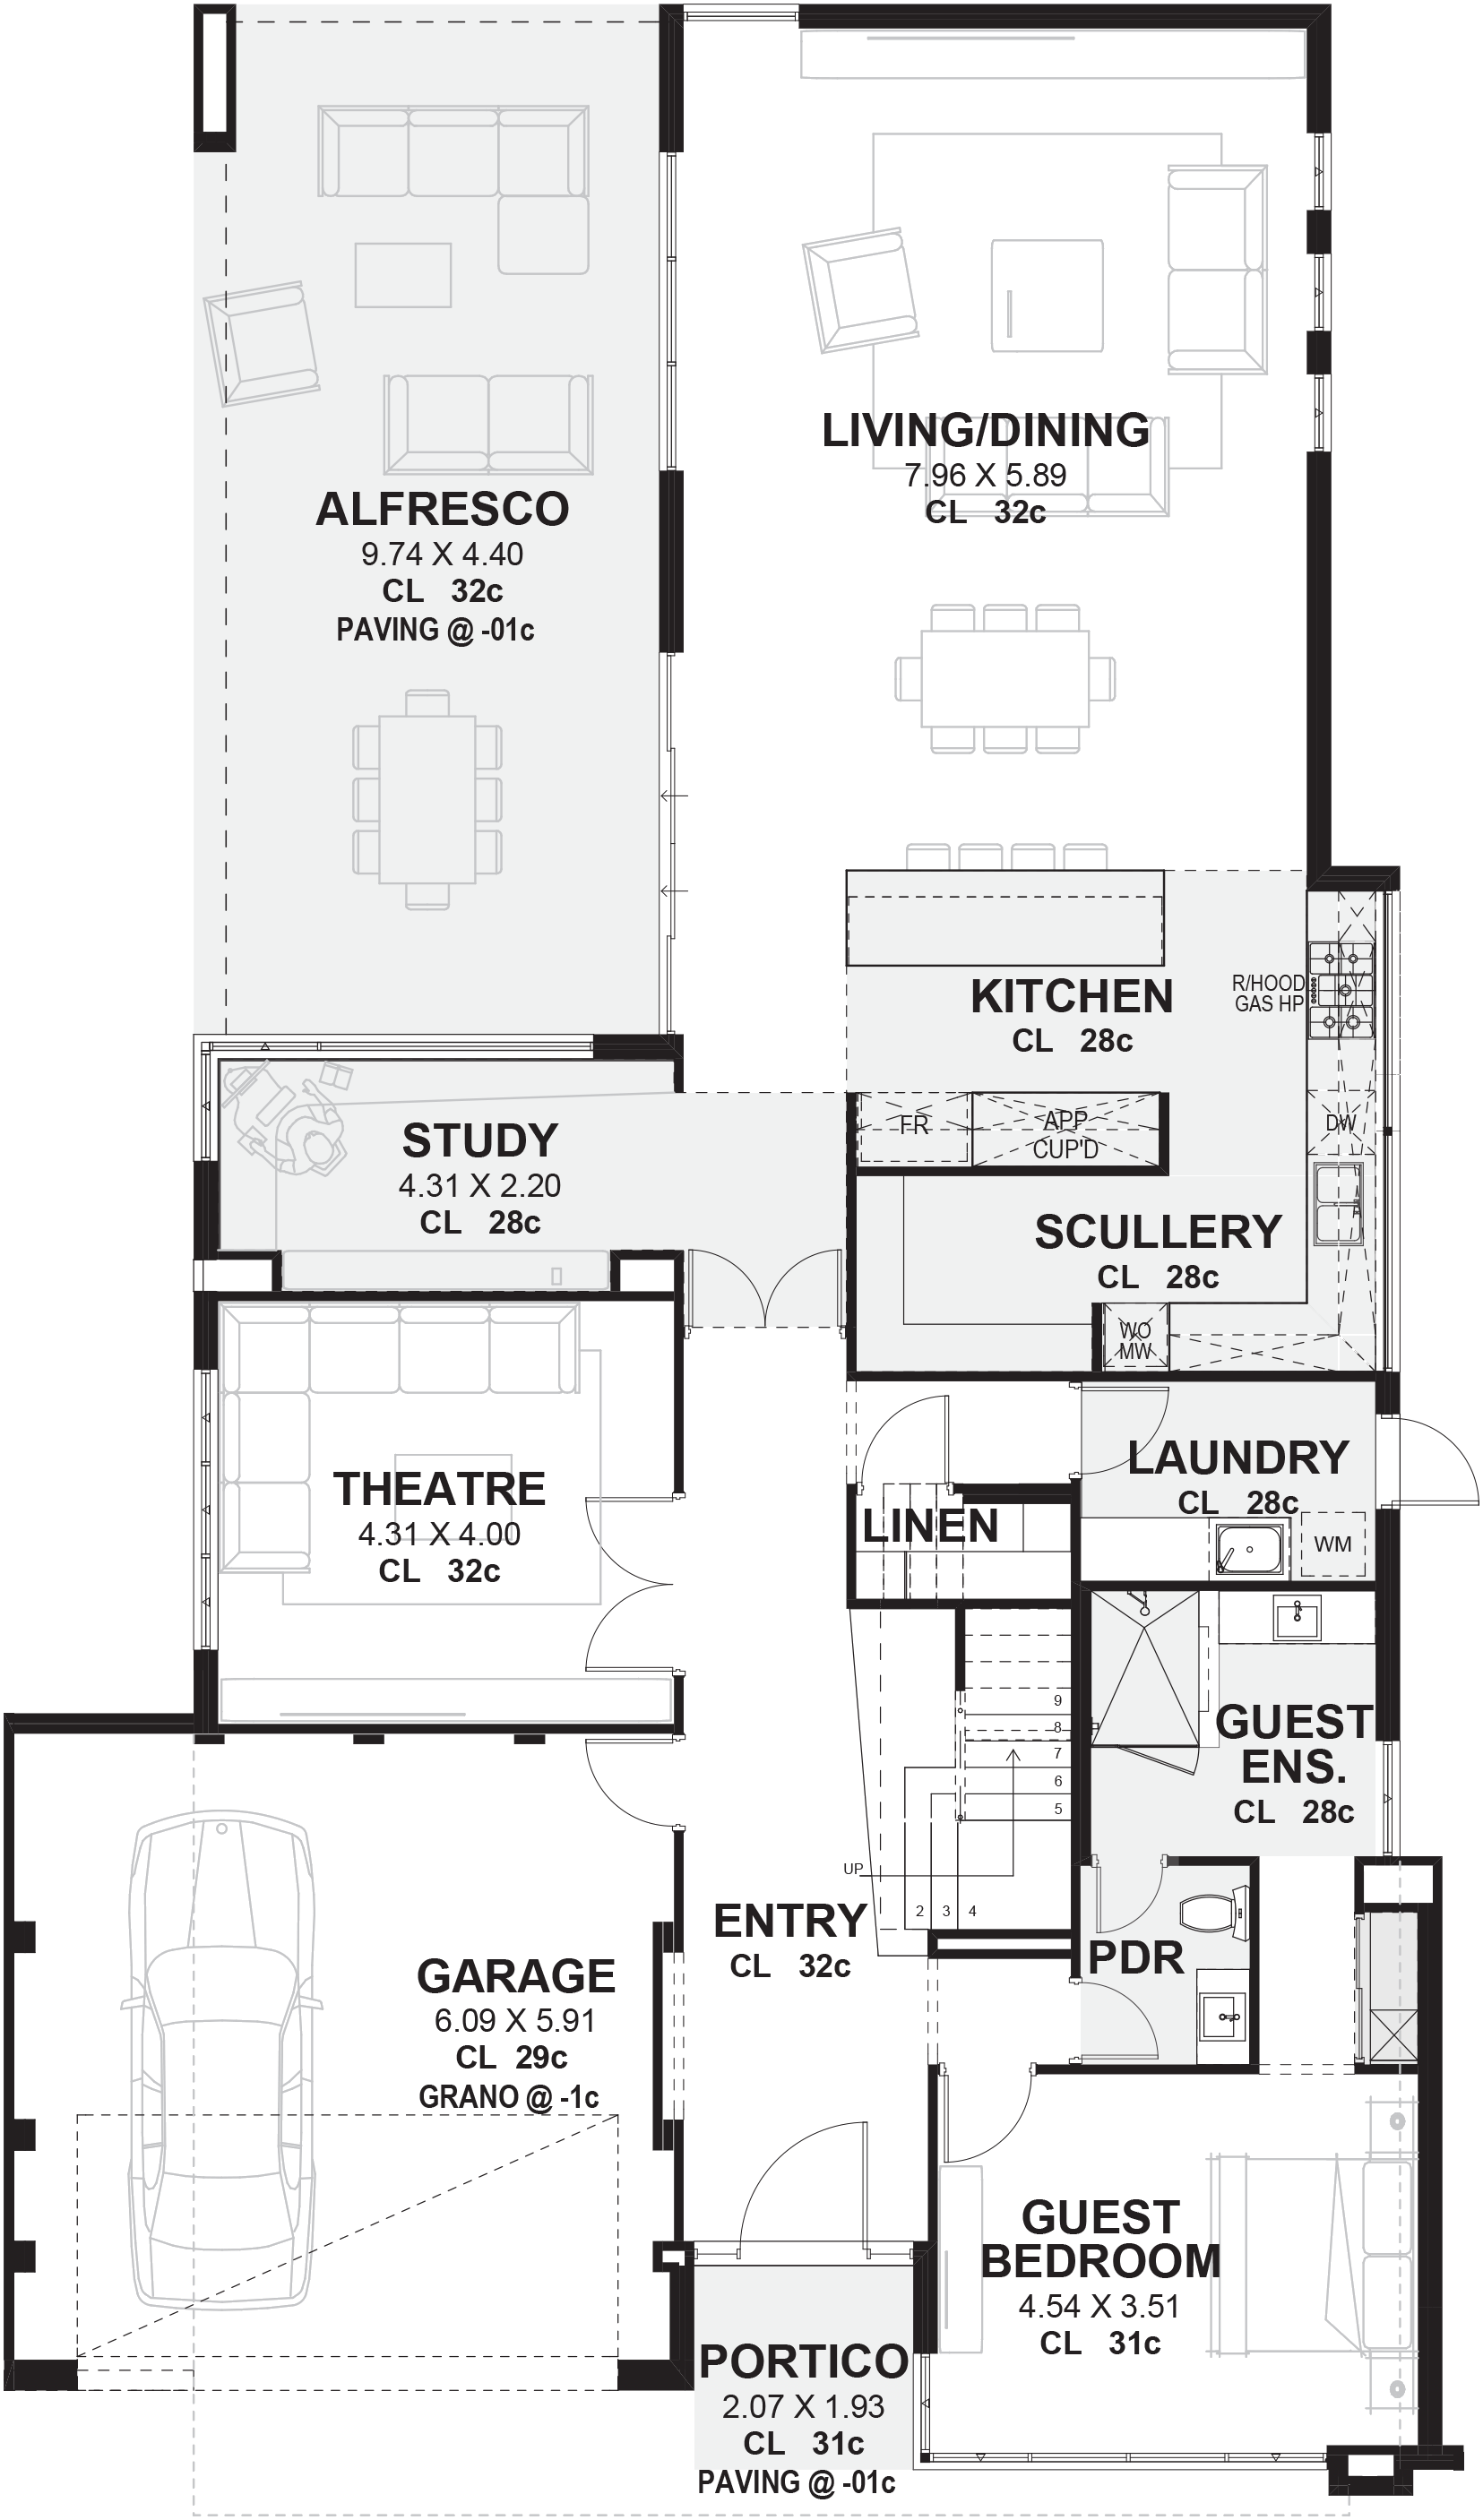 Paragon display home floor plan